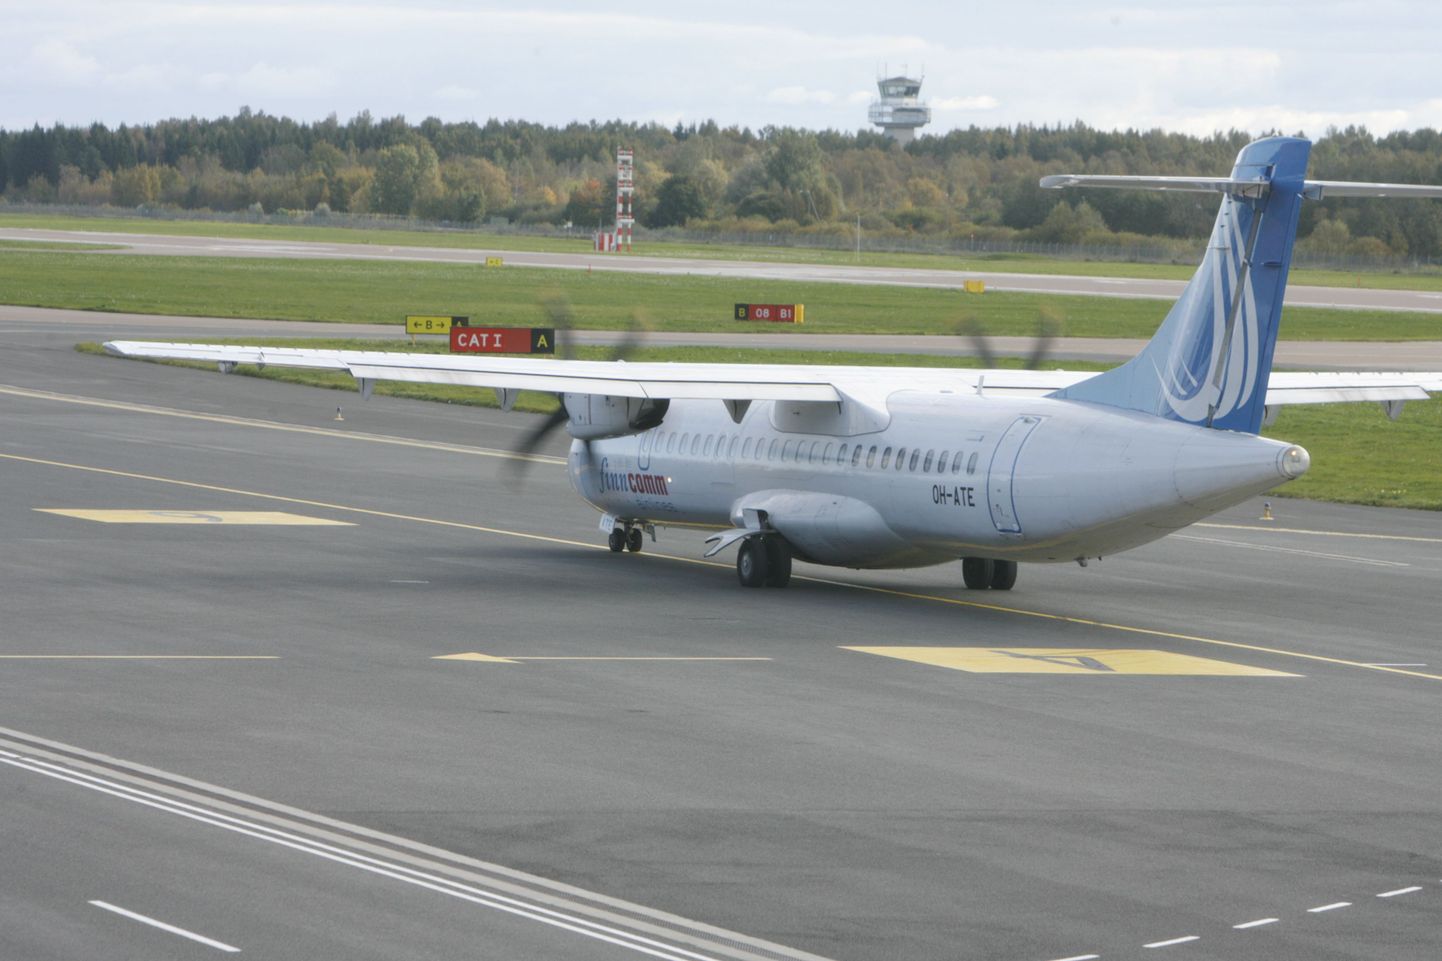 Finncomm lennuk Tallinna lennuväljal.